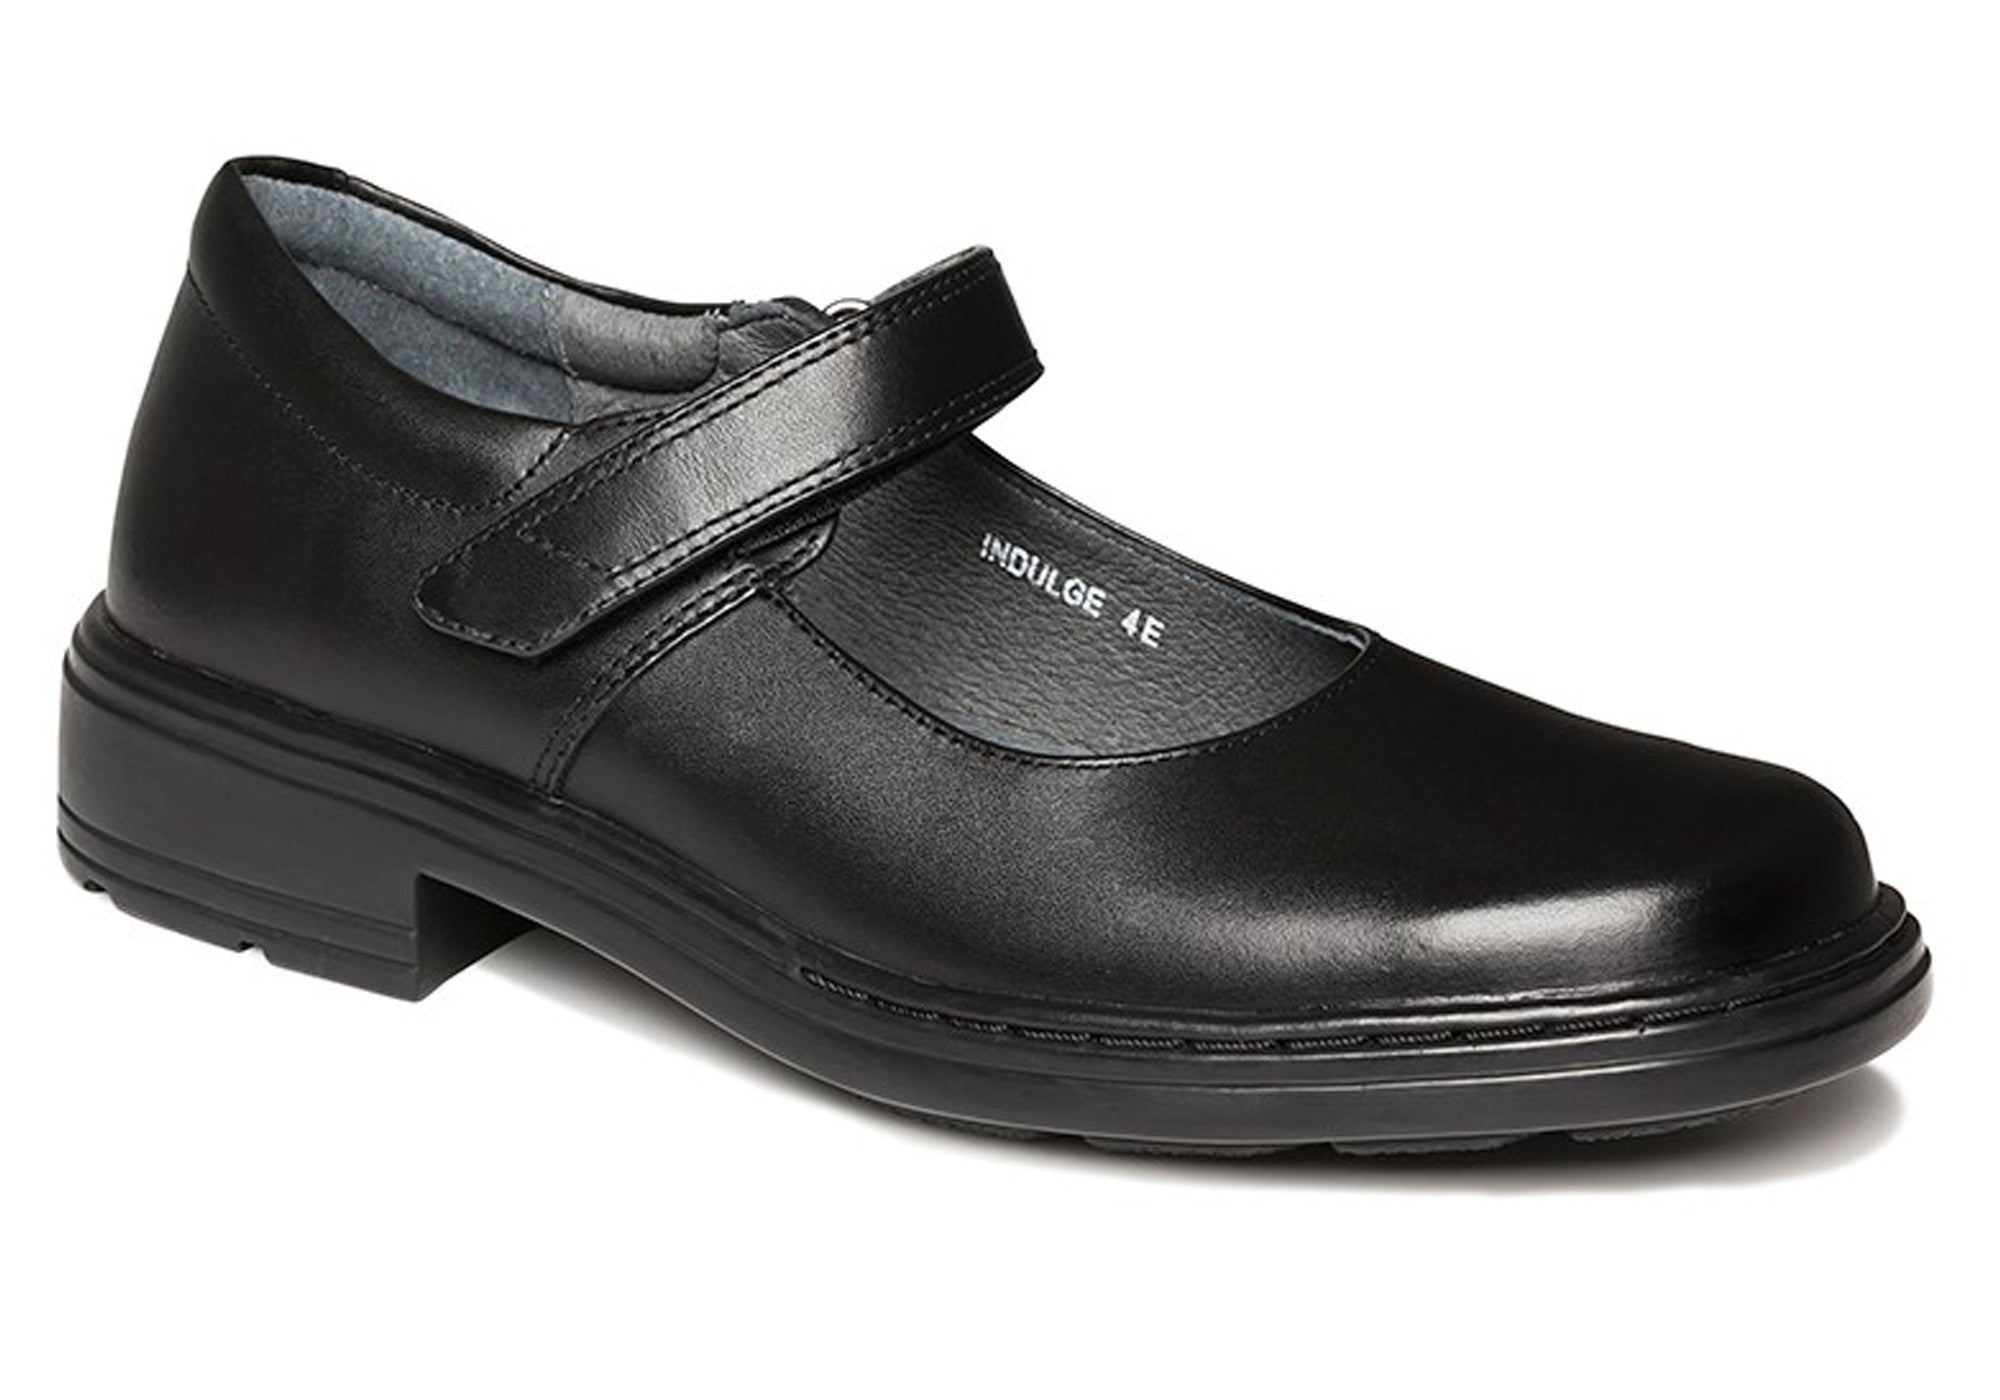 Clarks Indulge Junior Girls Black School Shoes